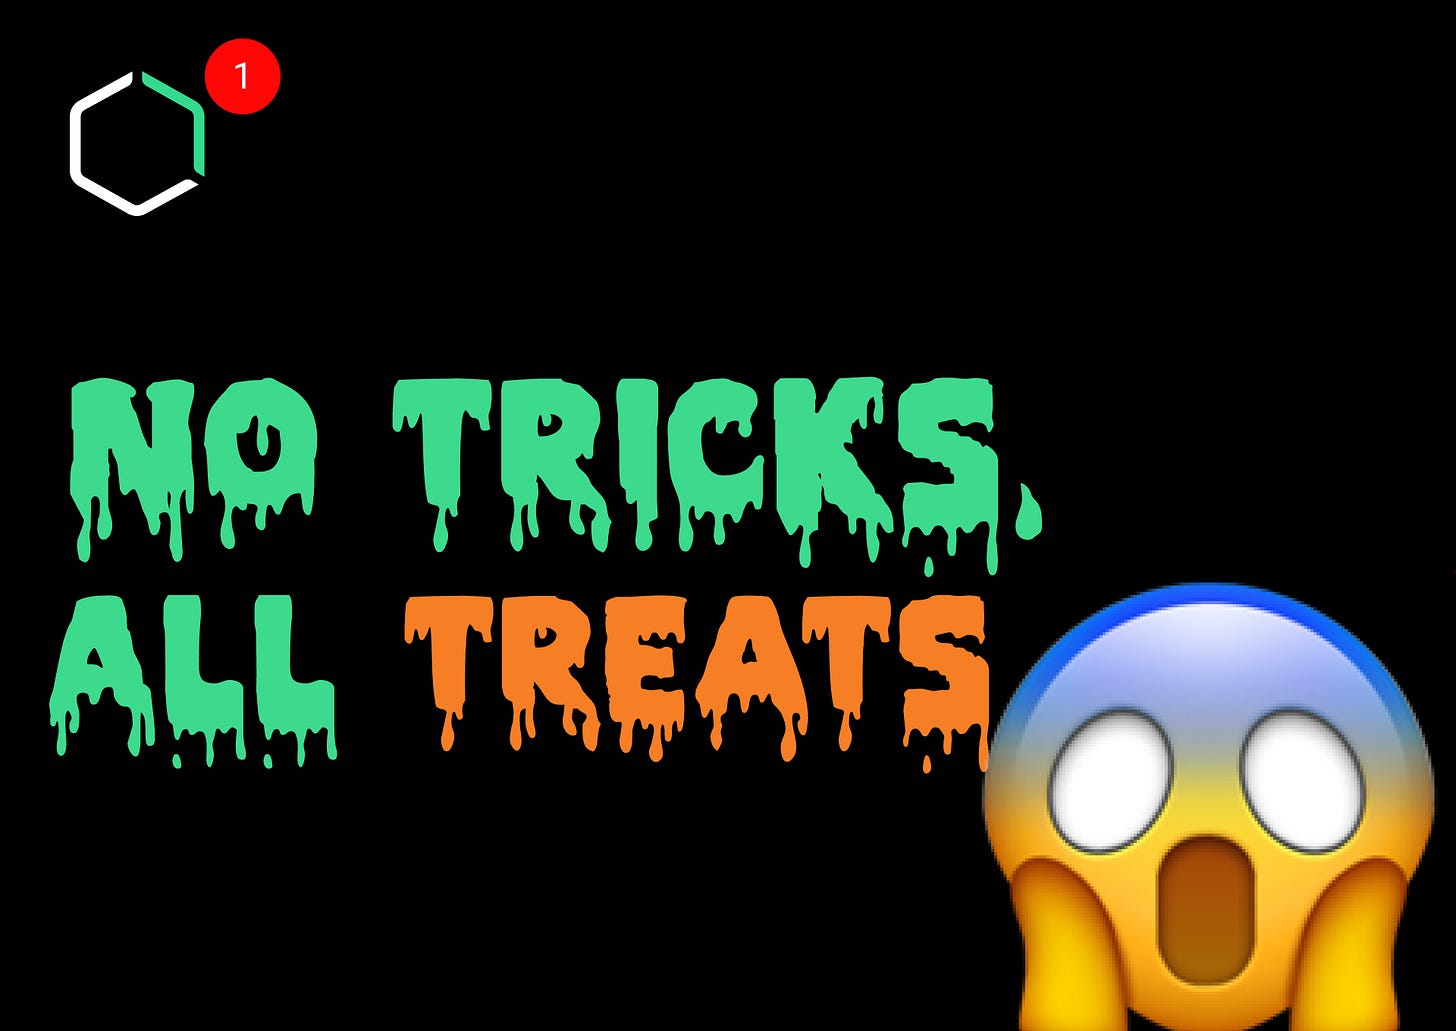 No tricks, all treats!